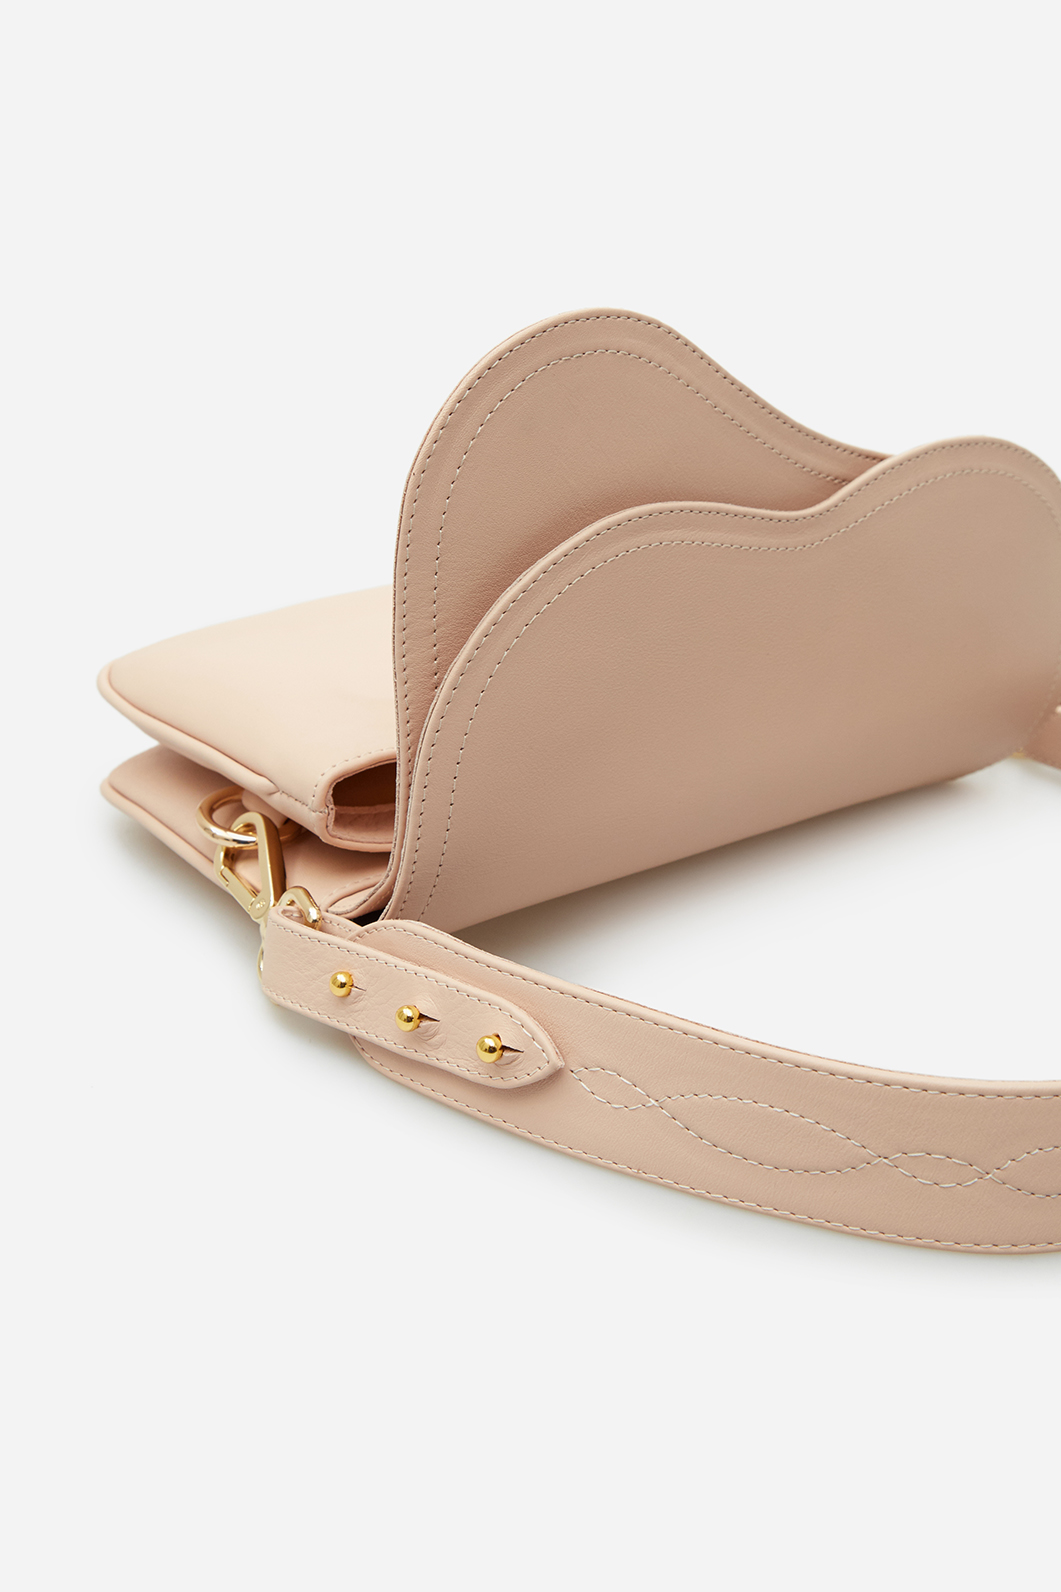 Saddle bag 2
pink-beige leather crossbody /gold/